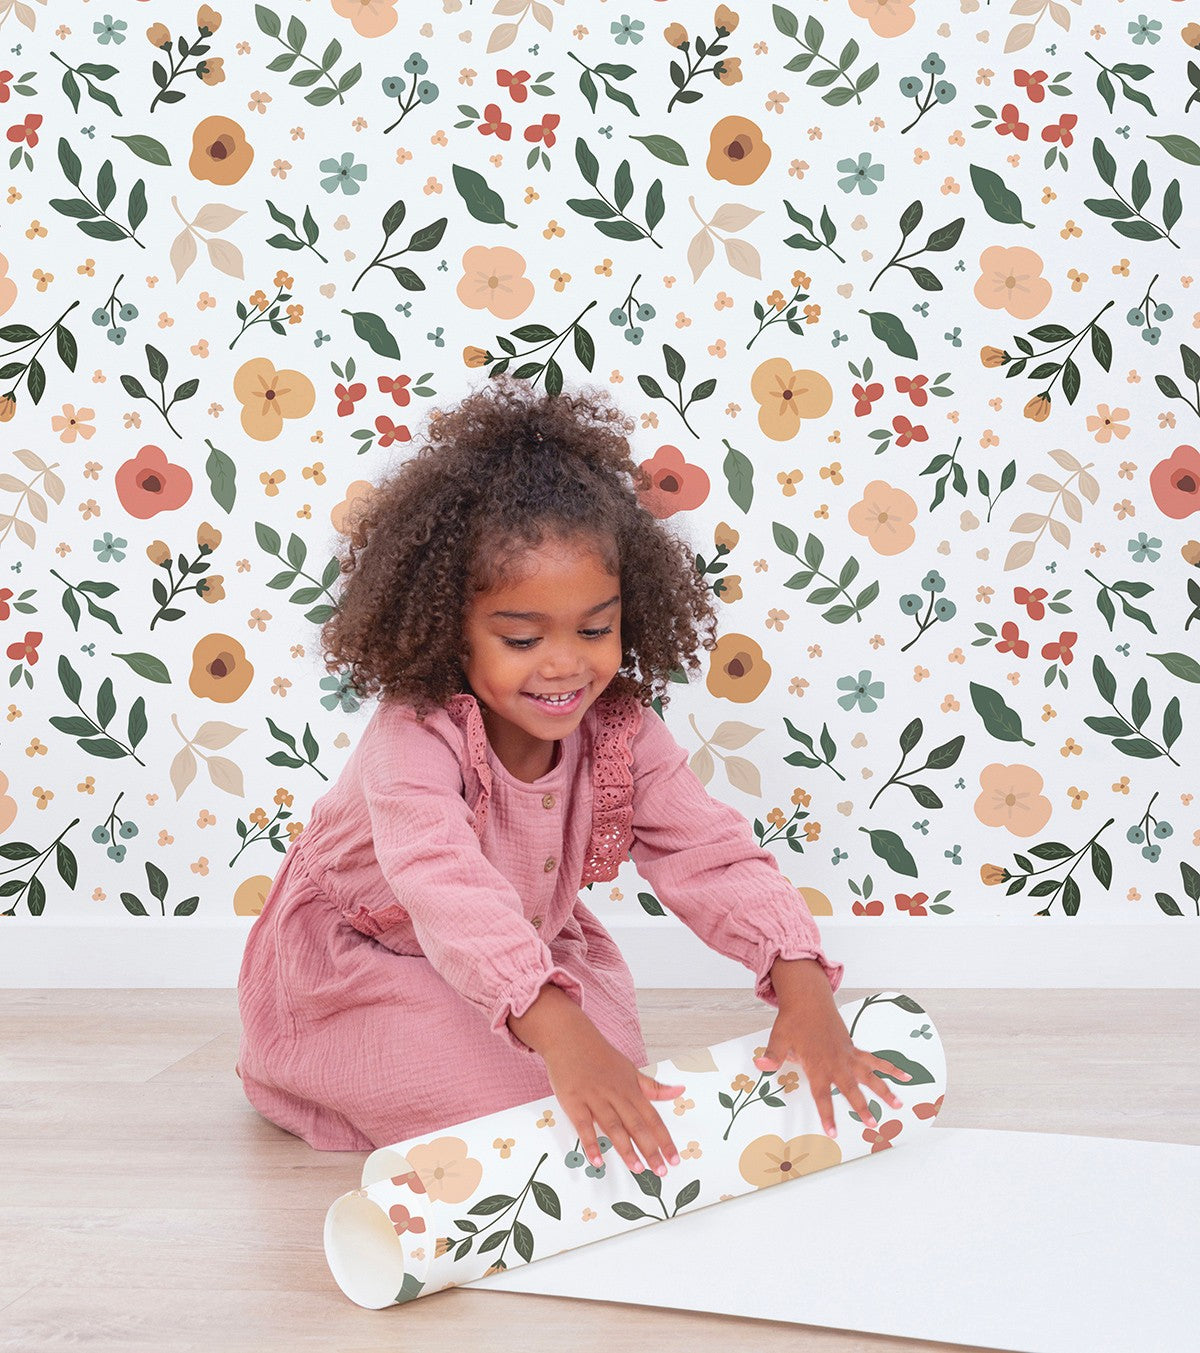 BLOEM - Papel pintado infantil - Motivo de flores y hojas